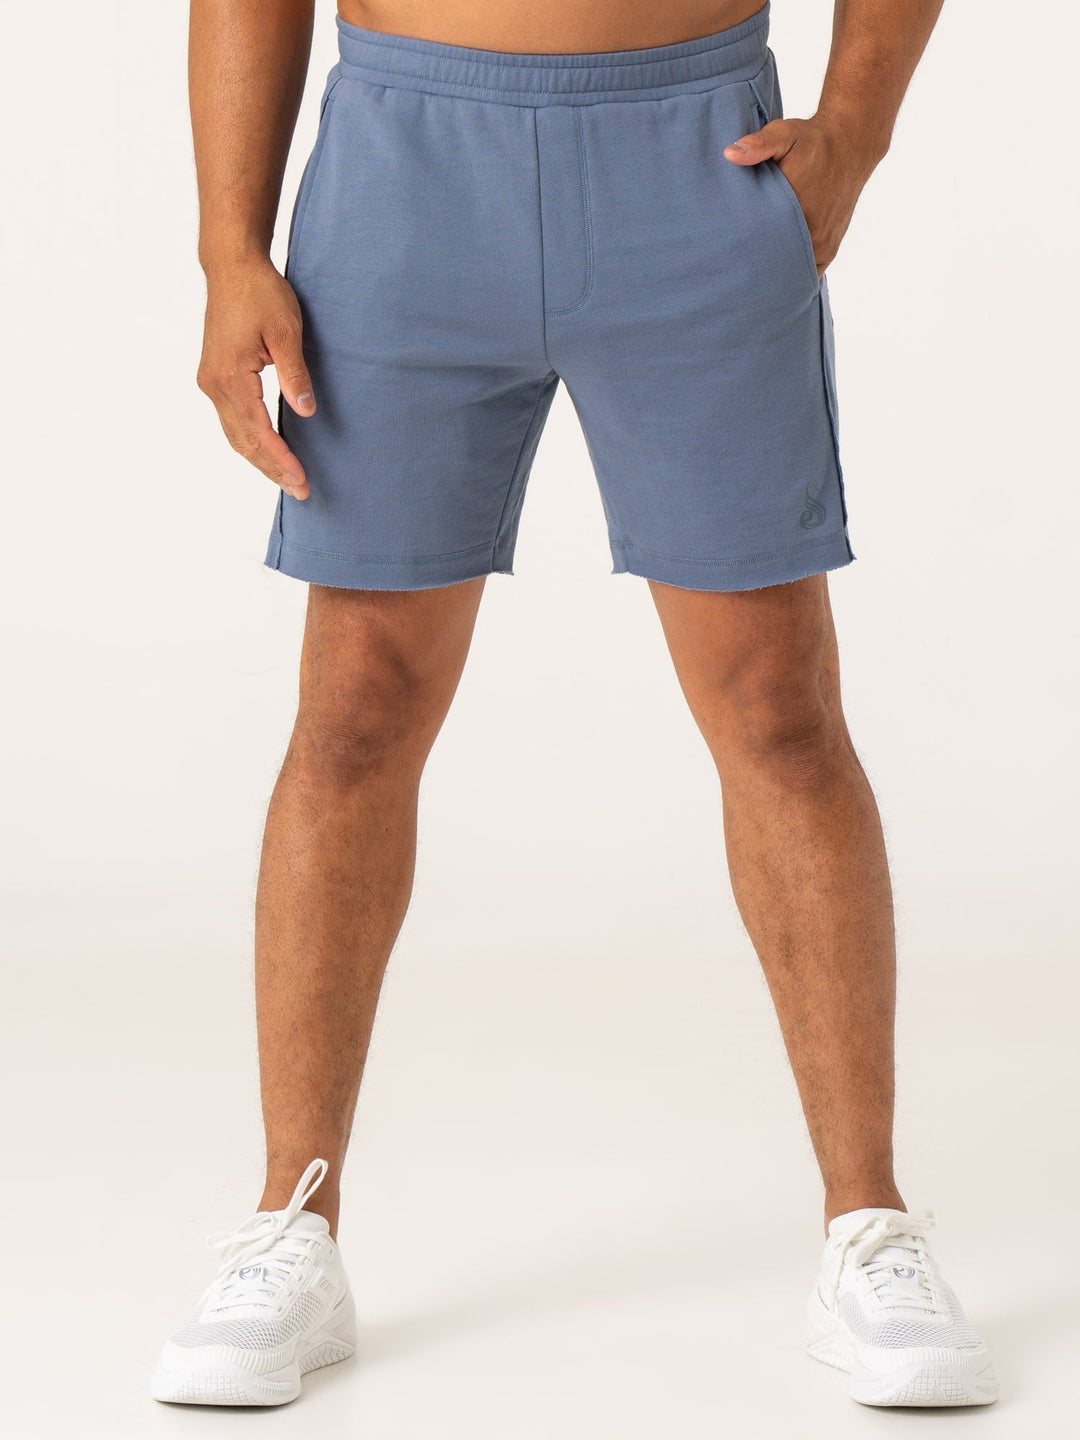 Pursuit Track Shorts - Denim Blue Clothing Ryderwear 